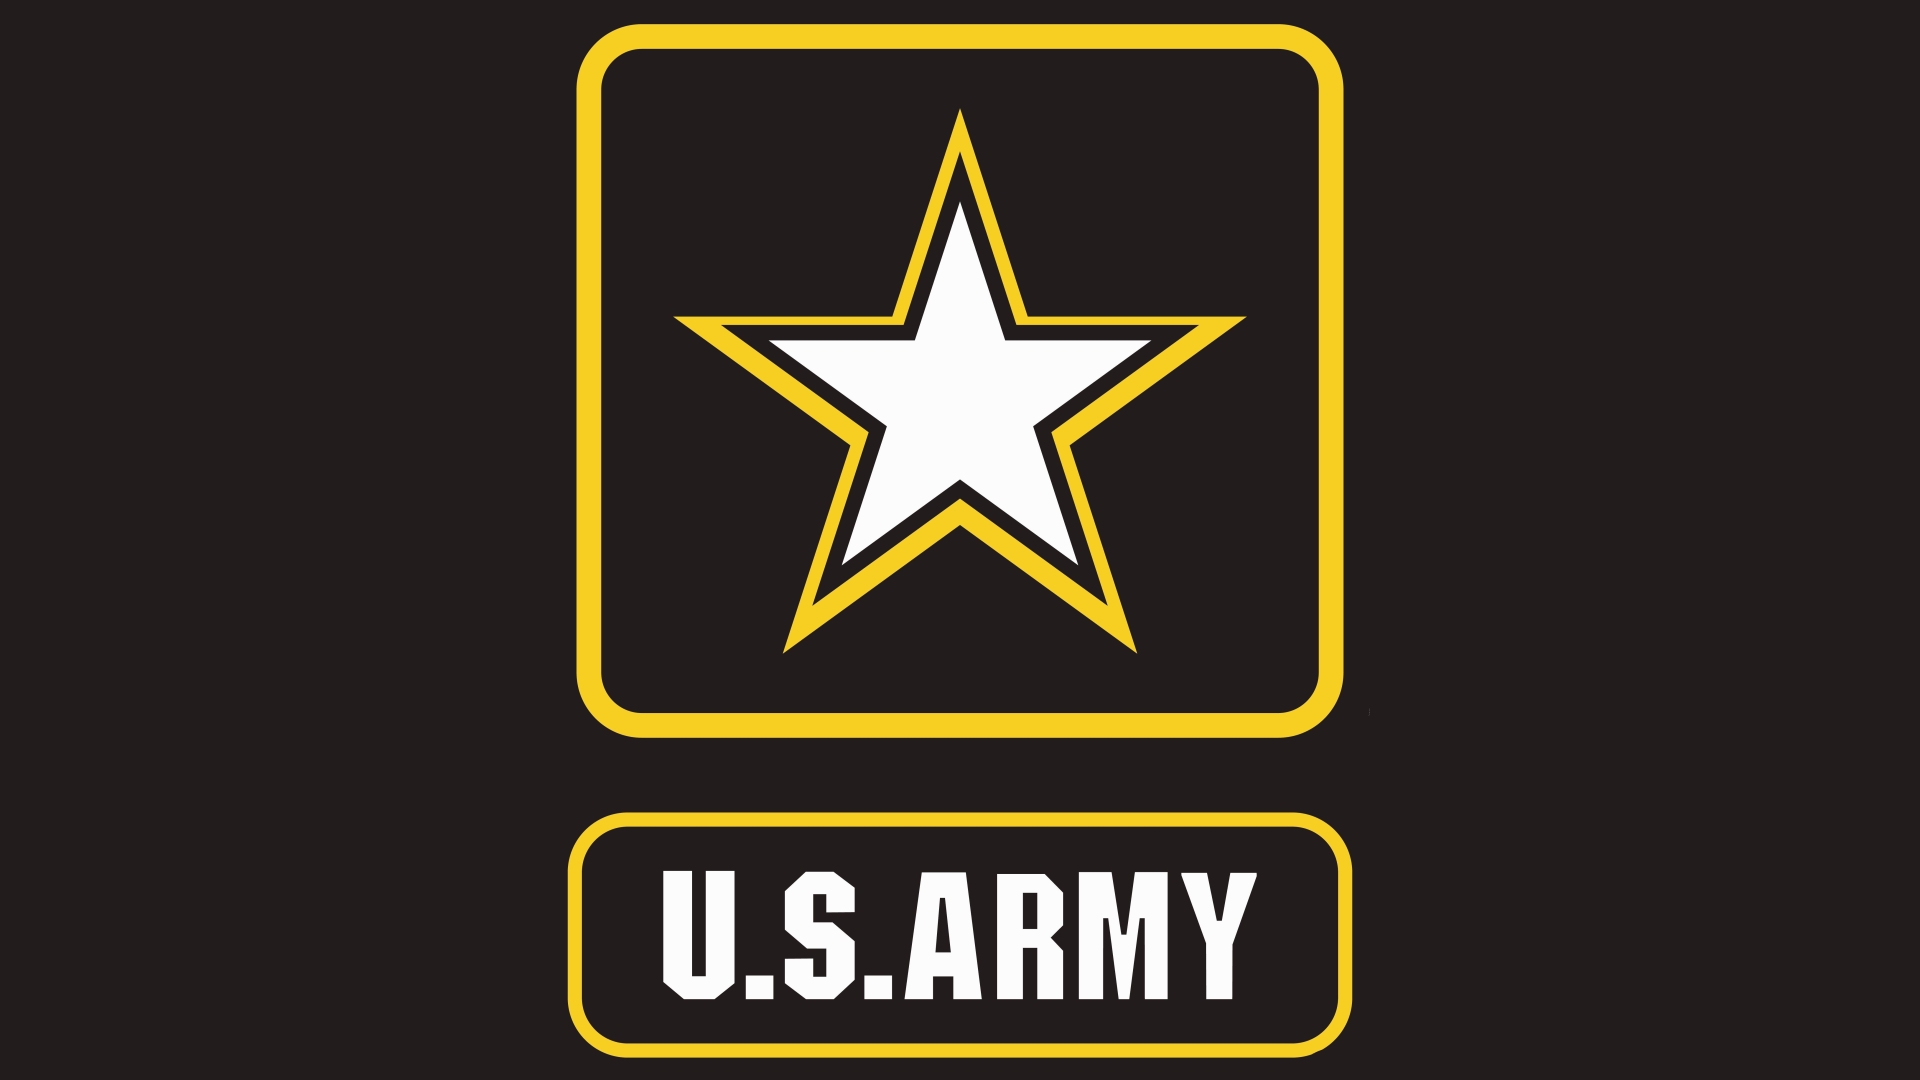 U.S. Army logo yellow star on black background